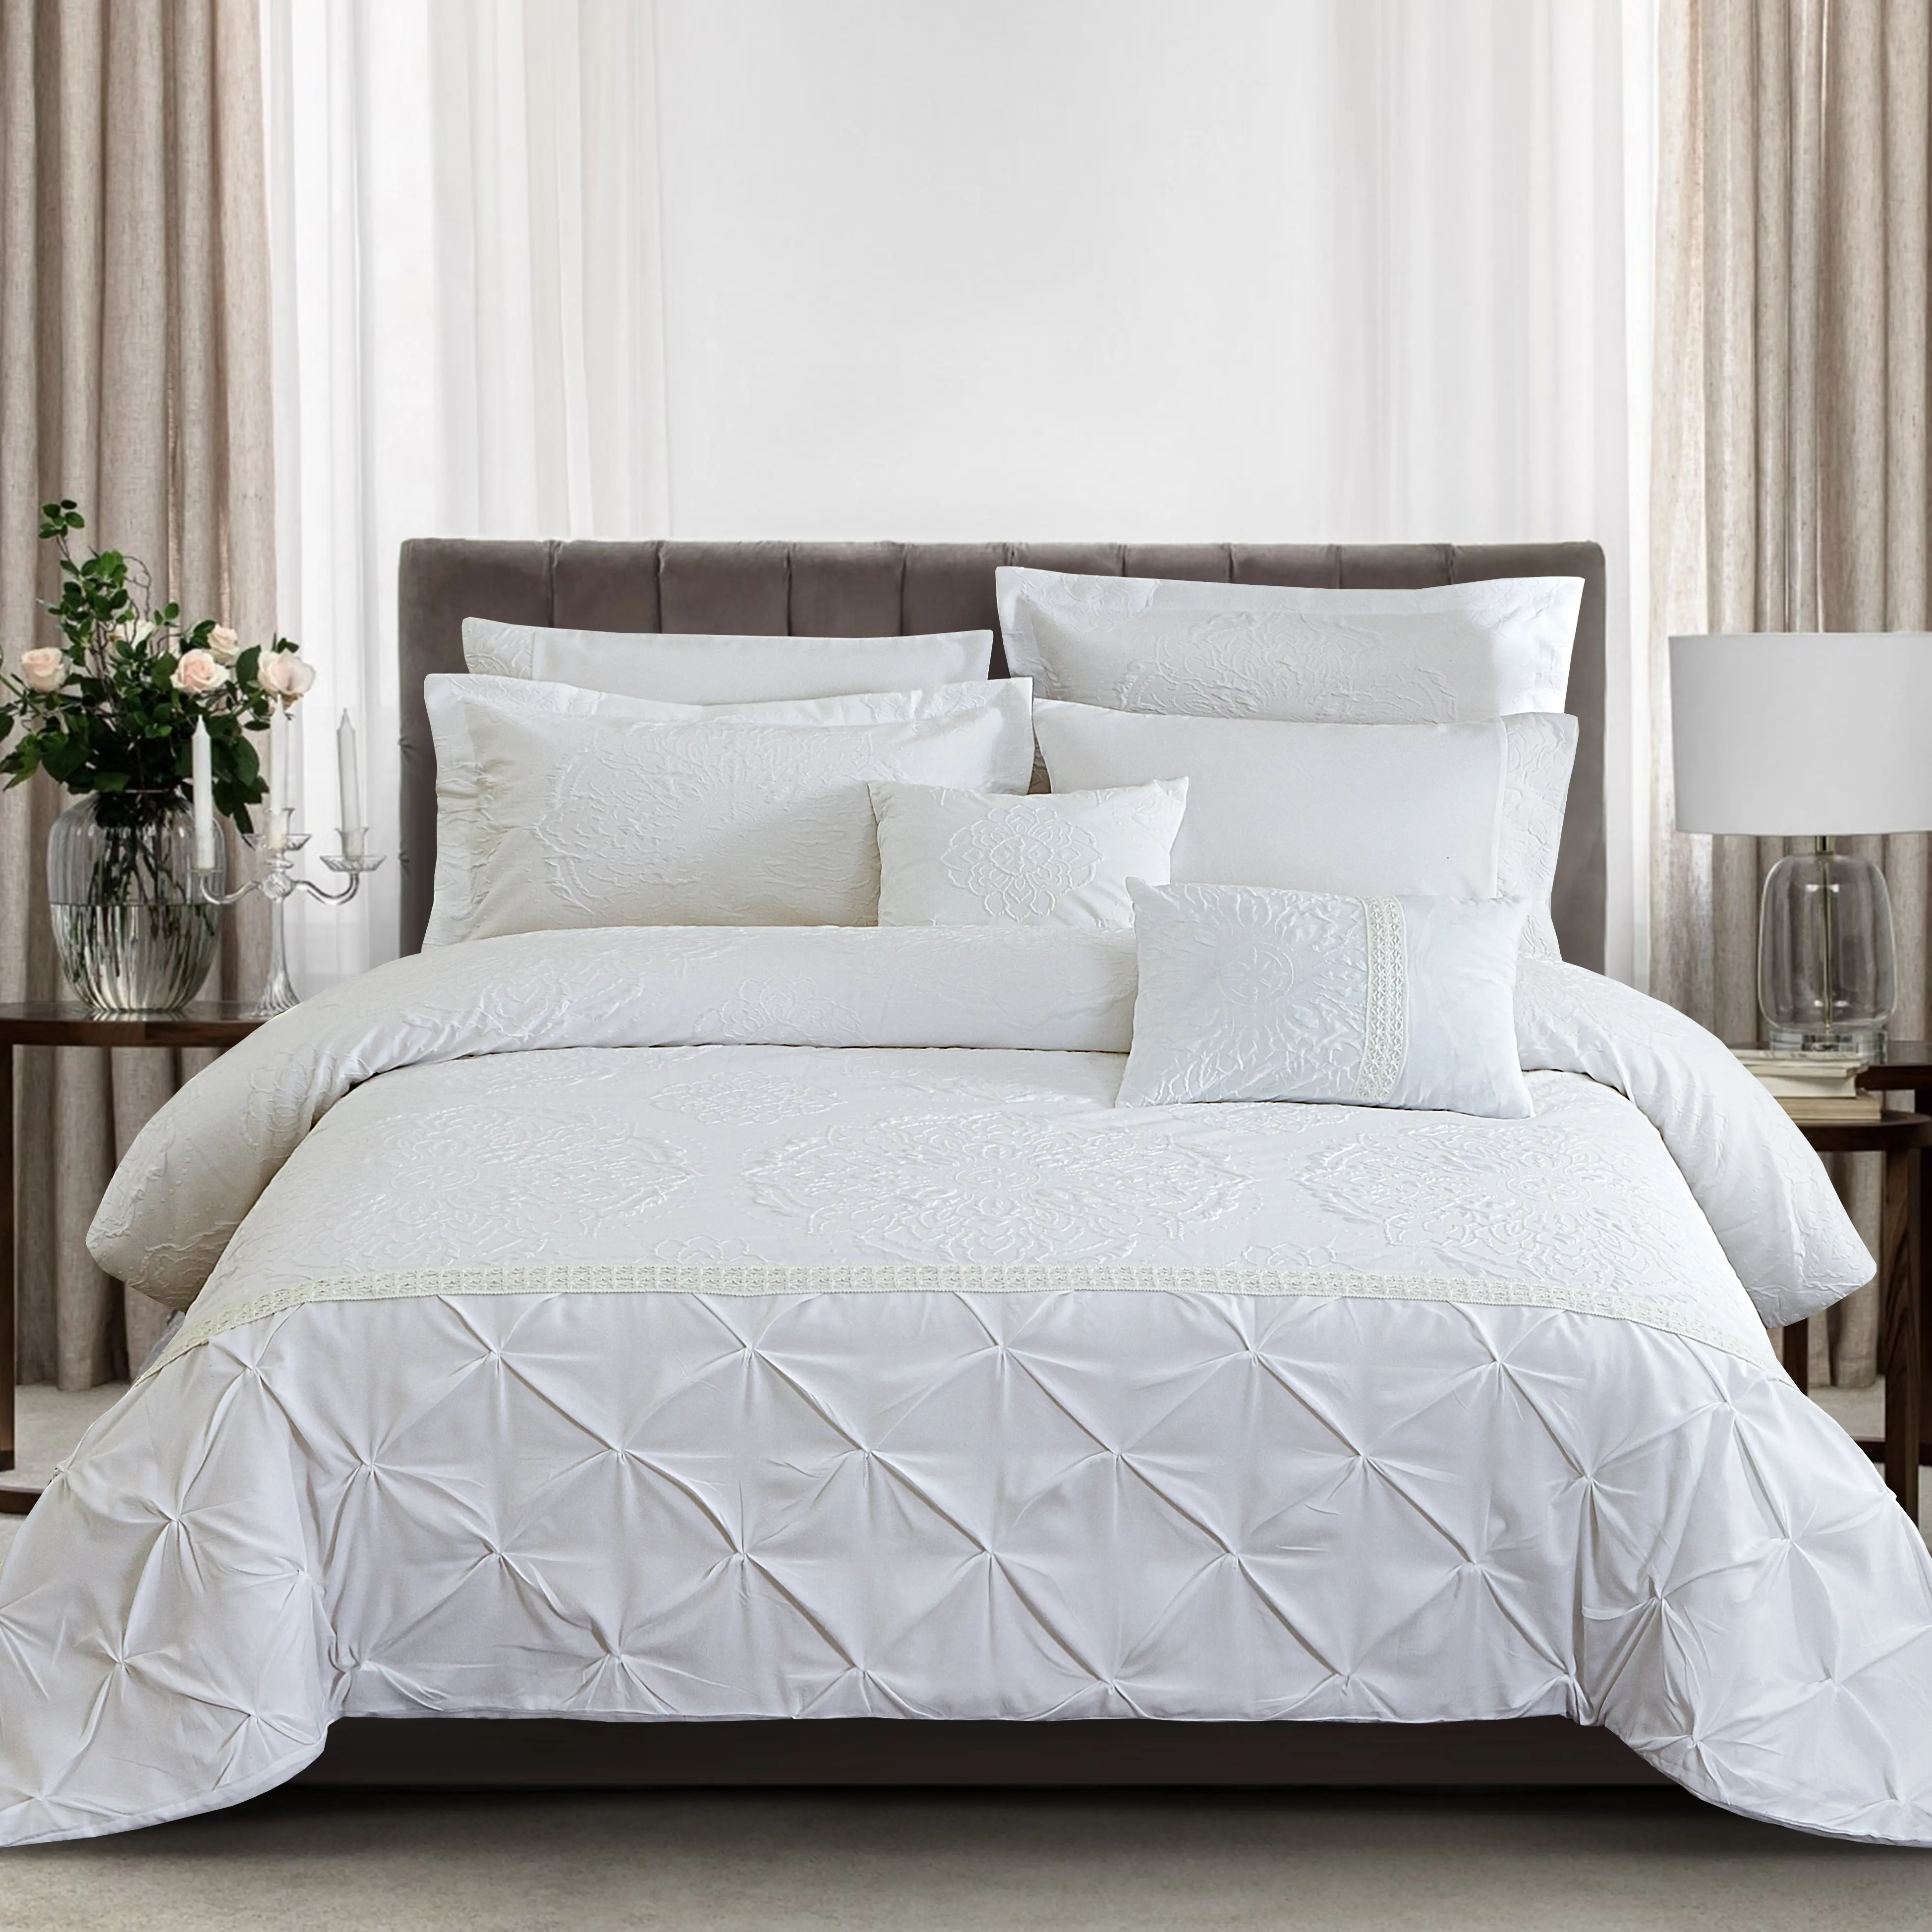 KOSMOS cotton bright color embroidery lace wholesale new design 3d bubble comforter set